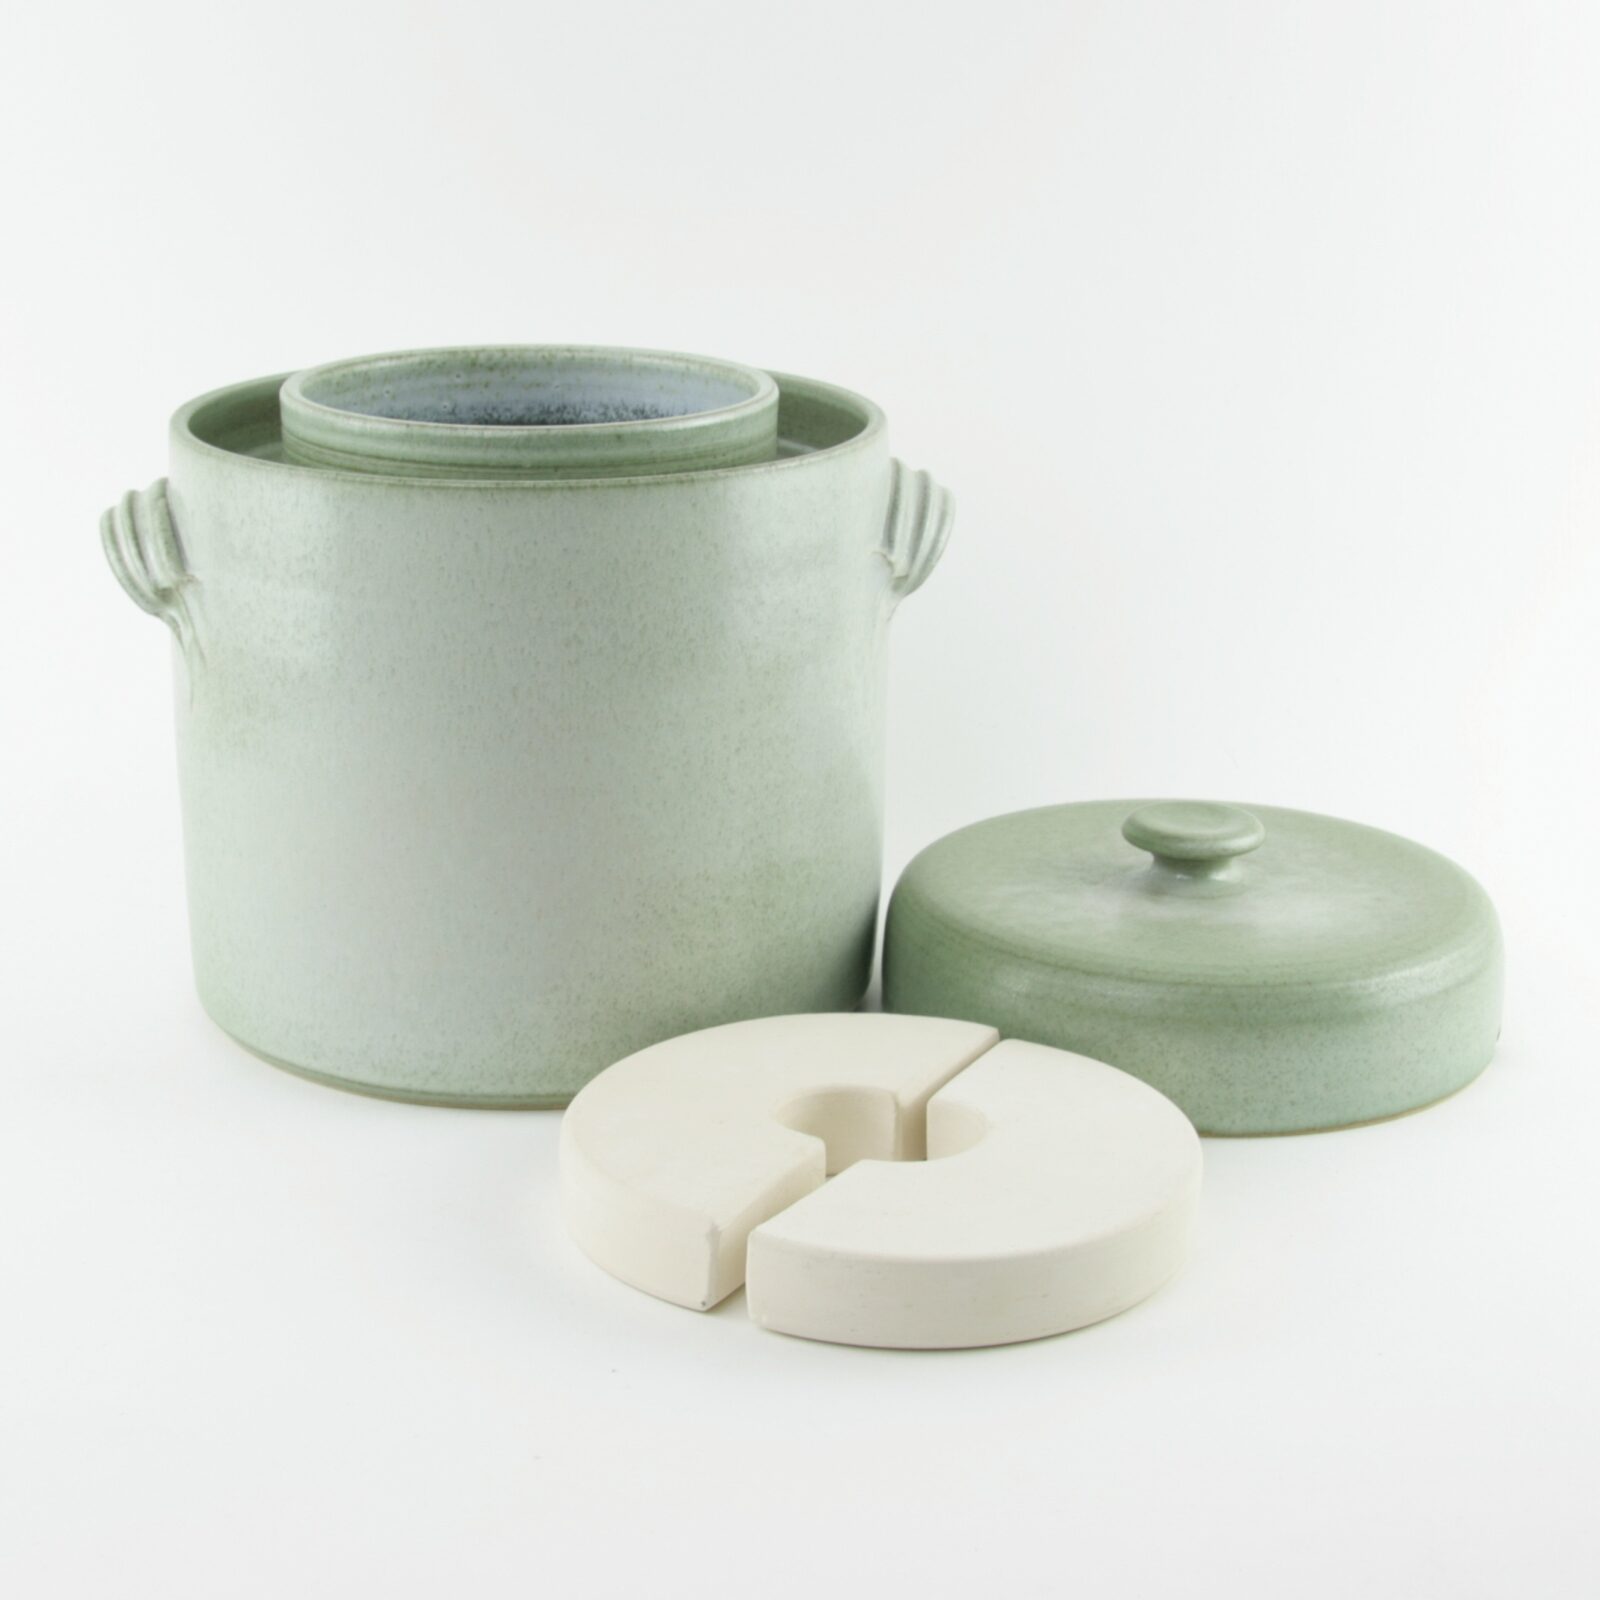 2 litre handmade ceramic sauerkraut crock in green with weight stones